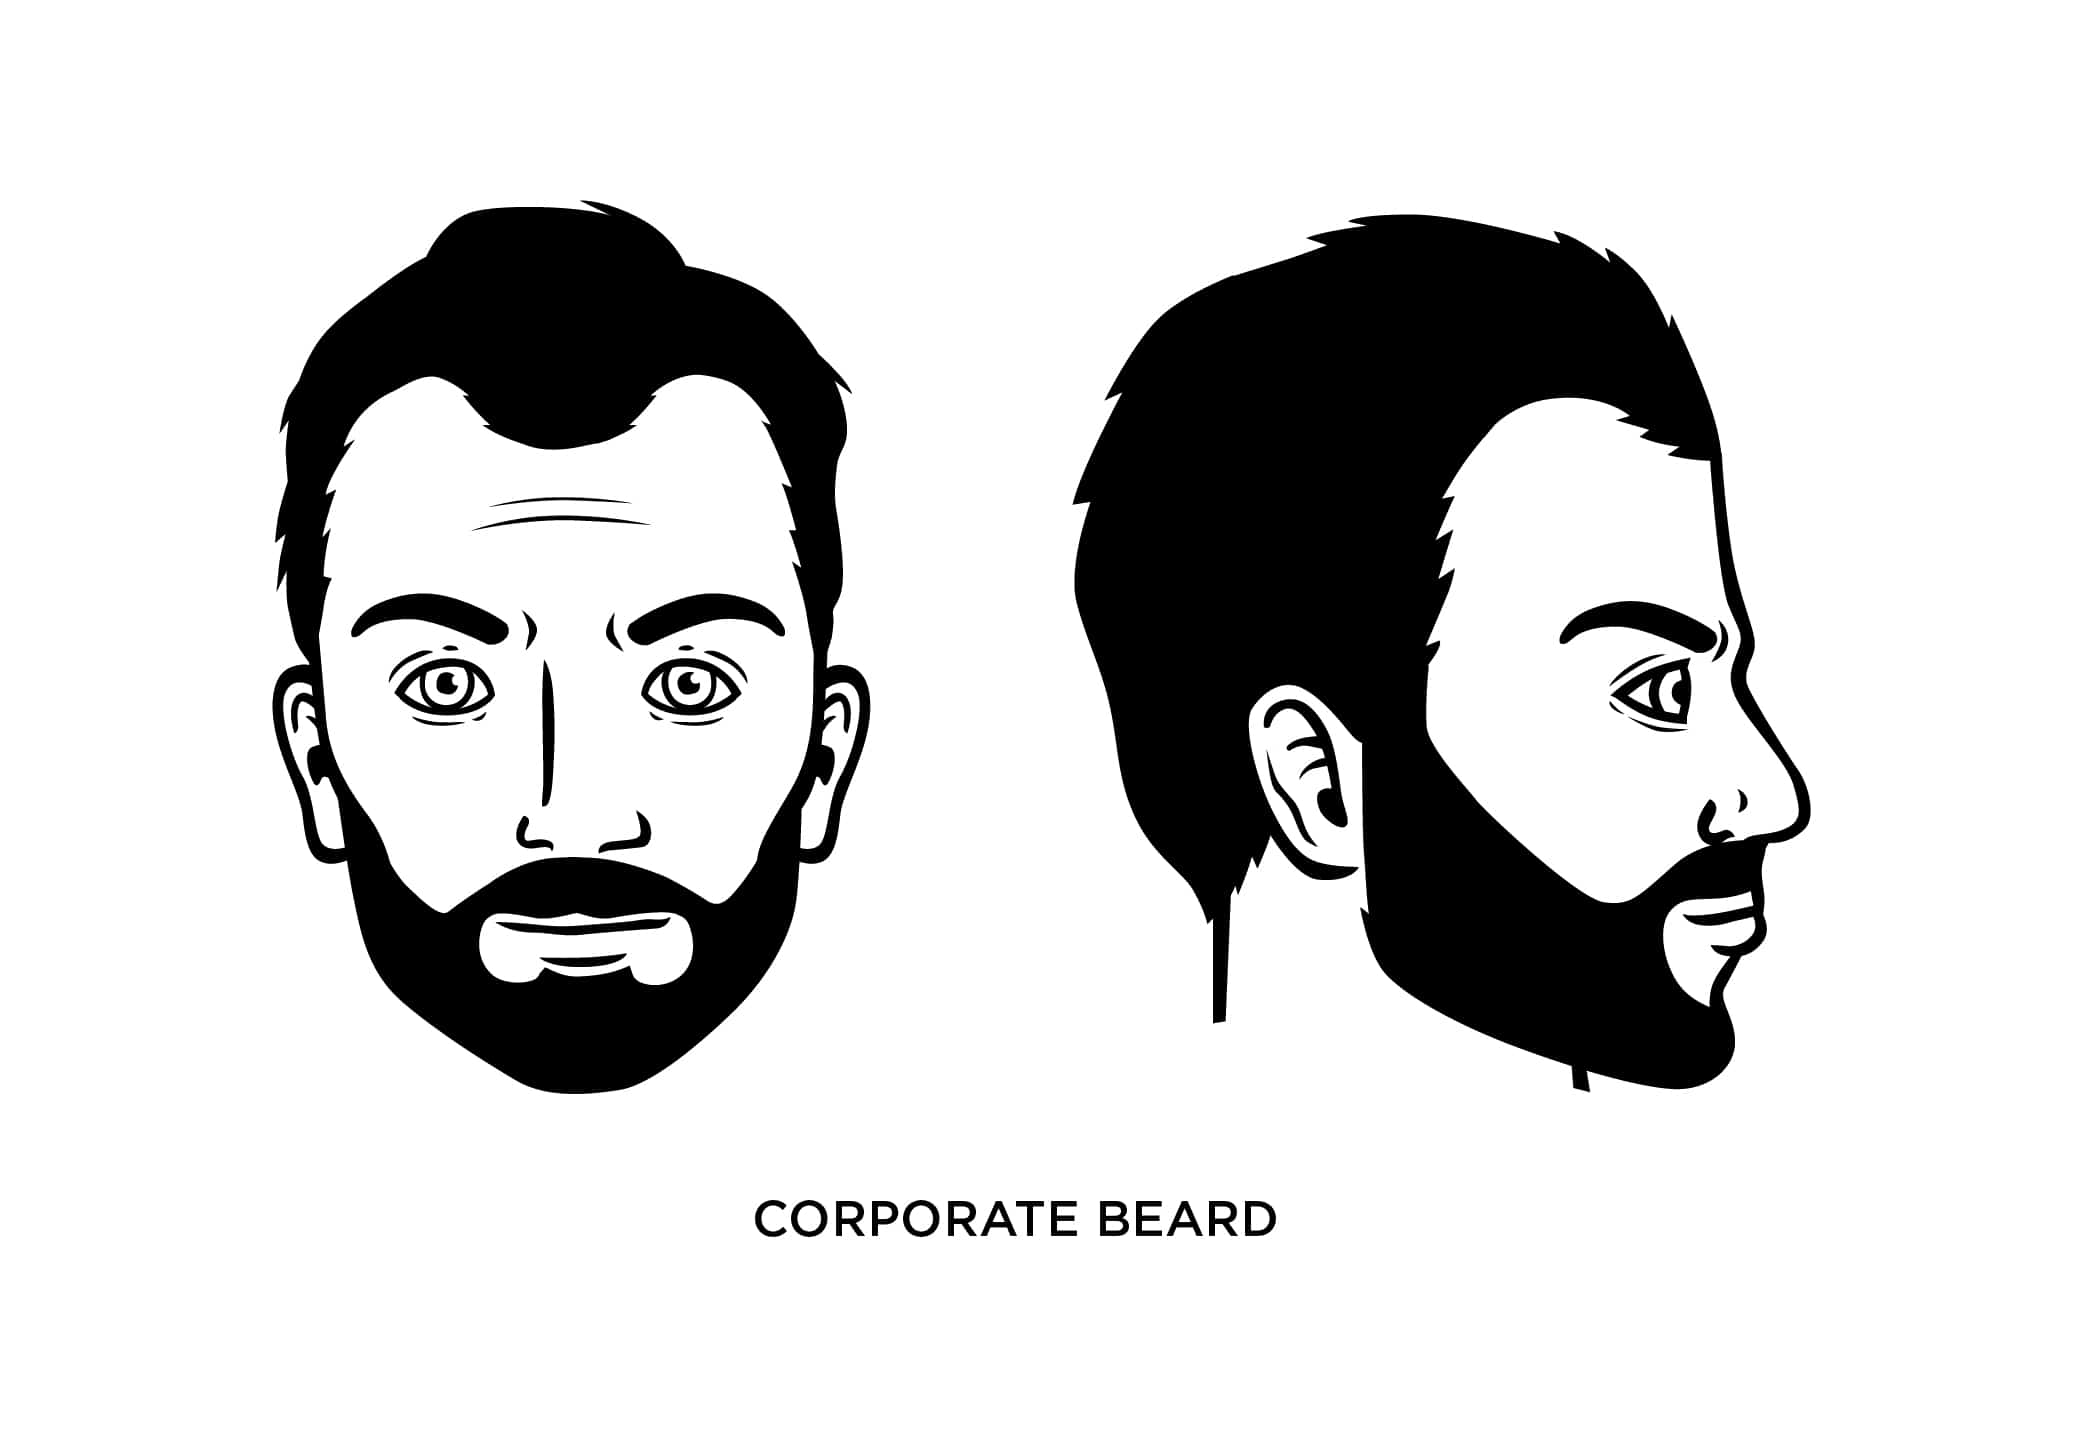 The corporate beard style